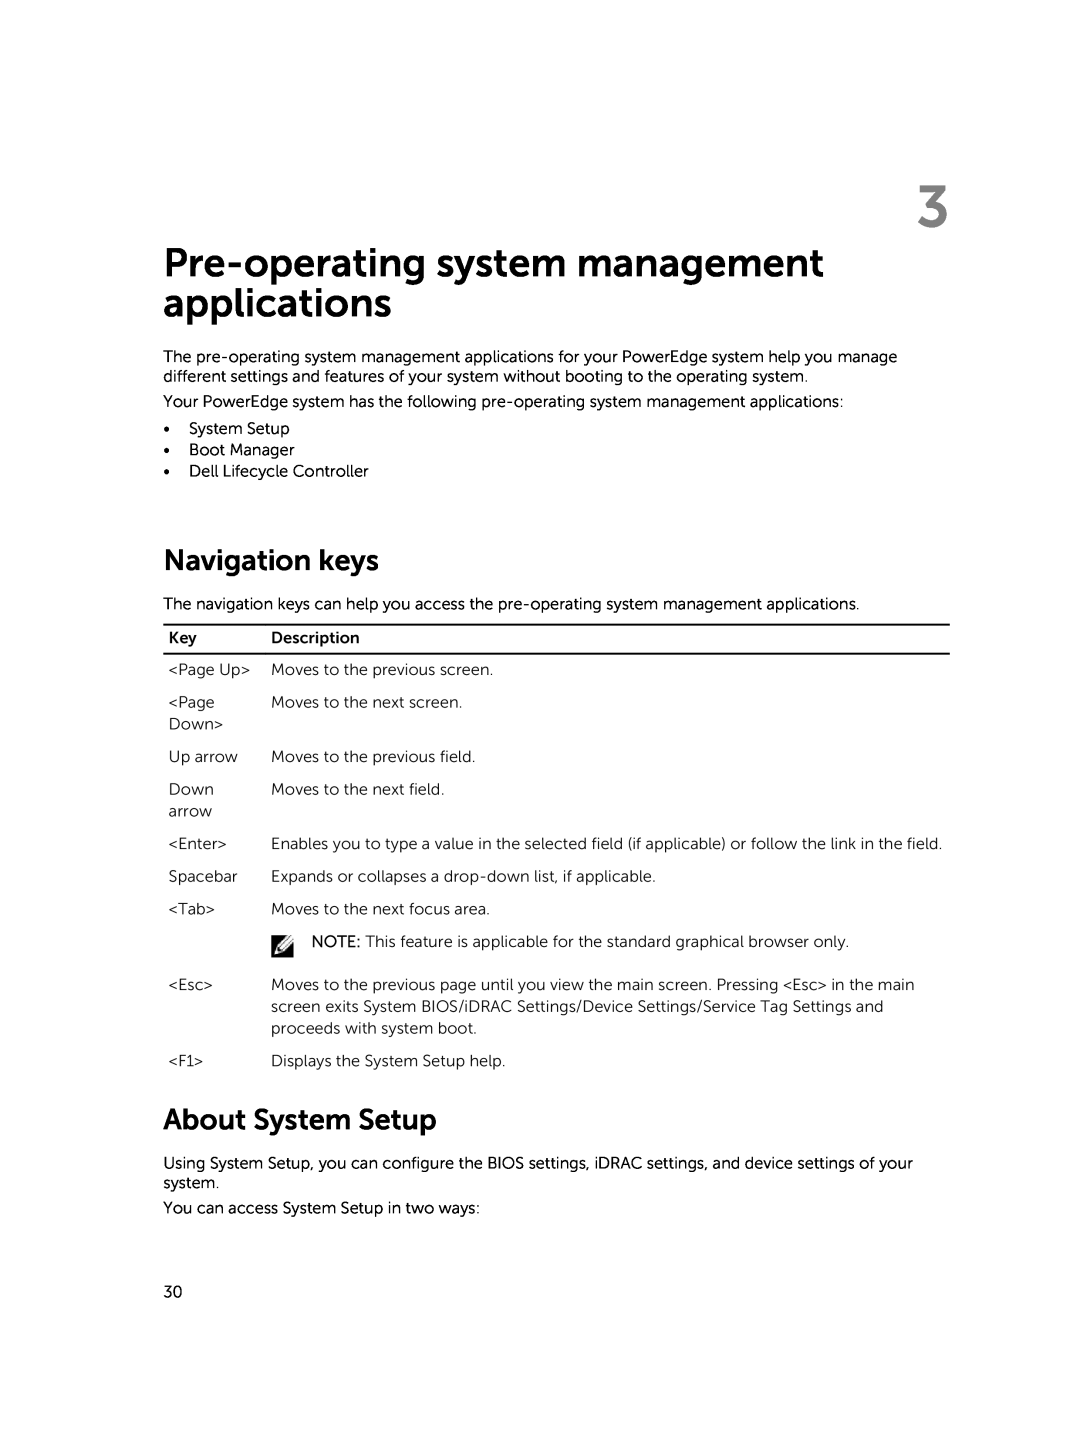 Dell E30S owner manual Pre-operating system management applications, Navigation keys, About System Setup 